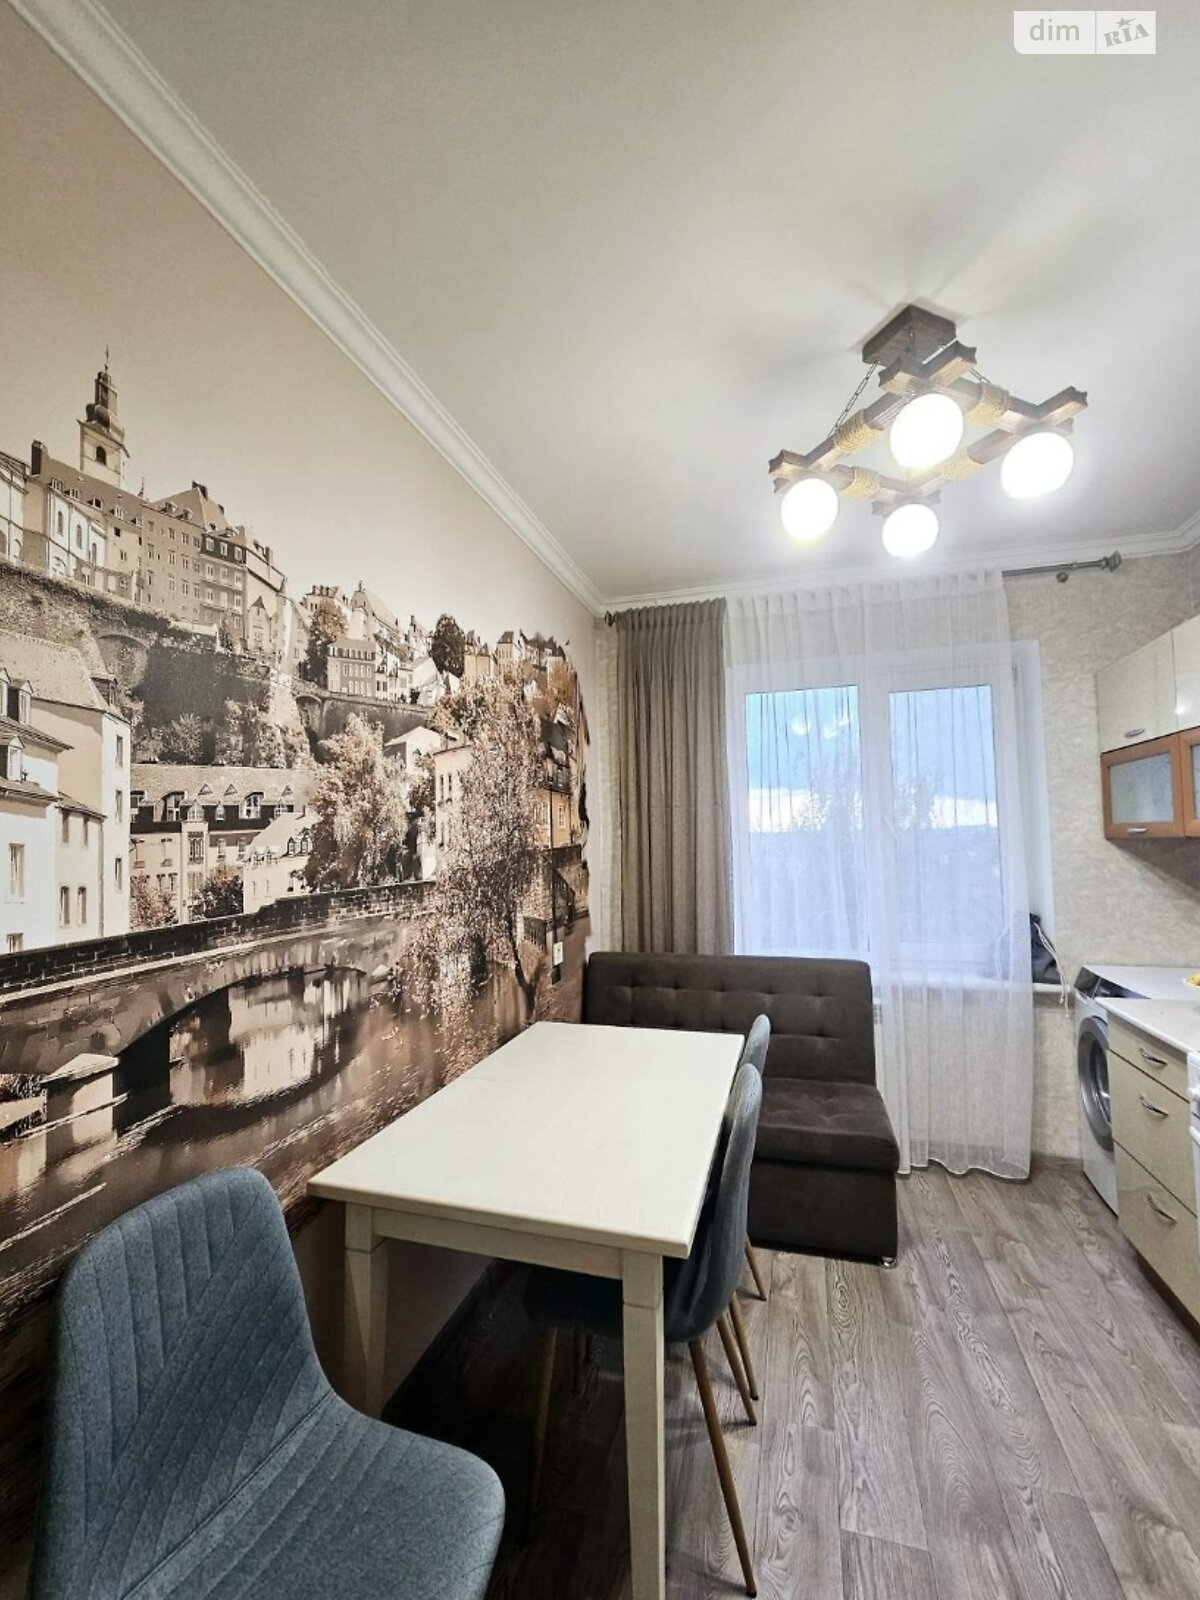 Продажа трехкомнатной квартиры в Ровно, на ул. Вербова 37, район Ювилейный фото 1